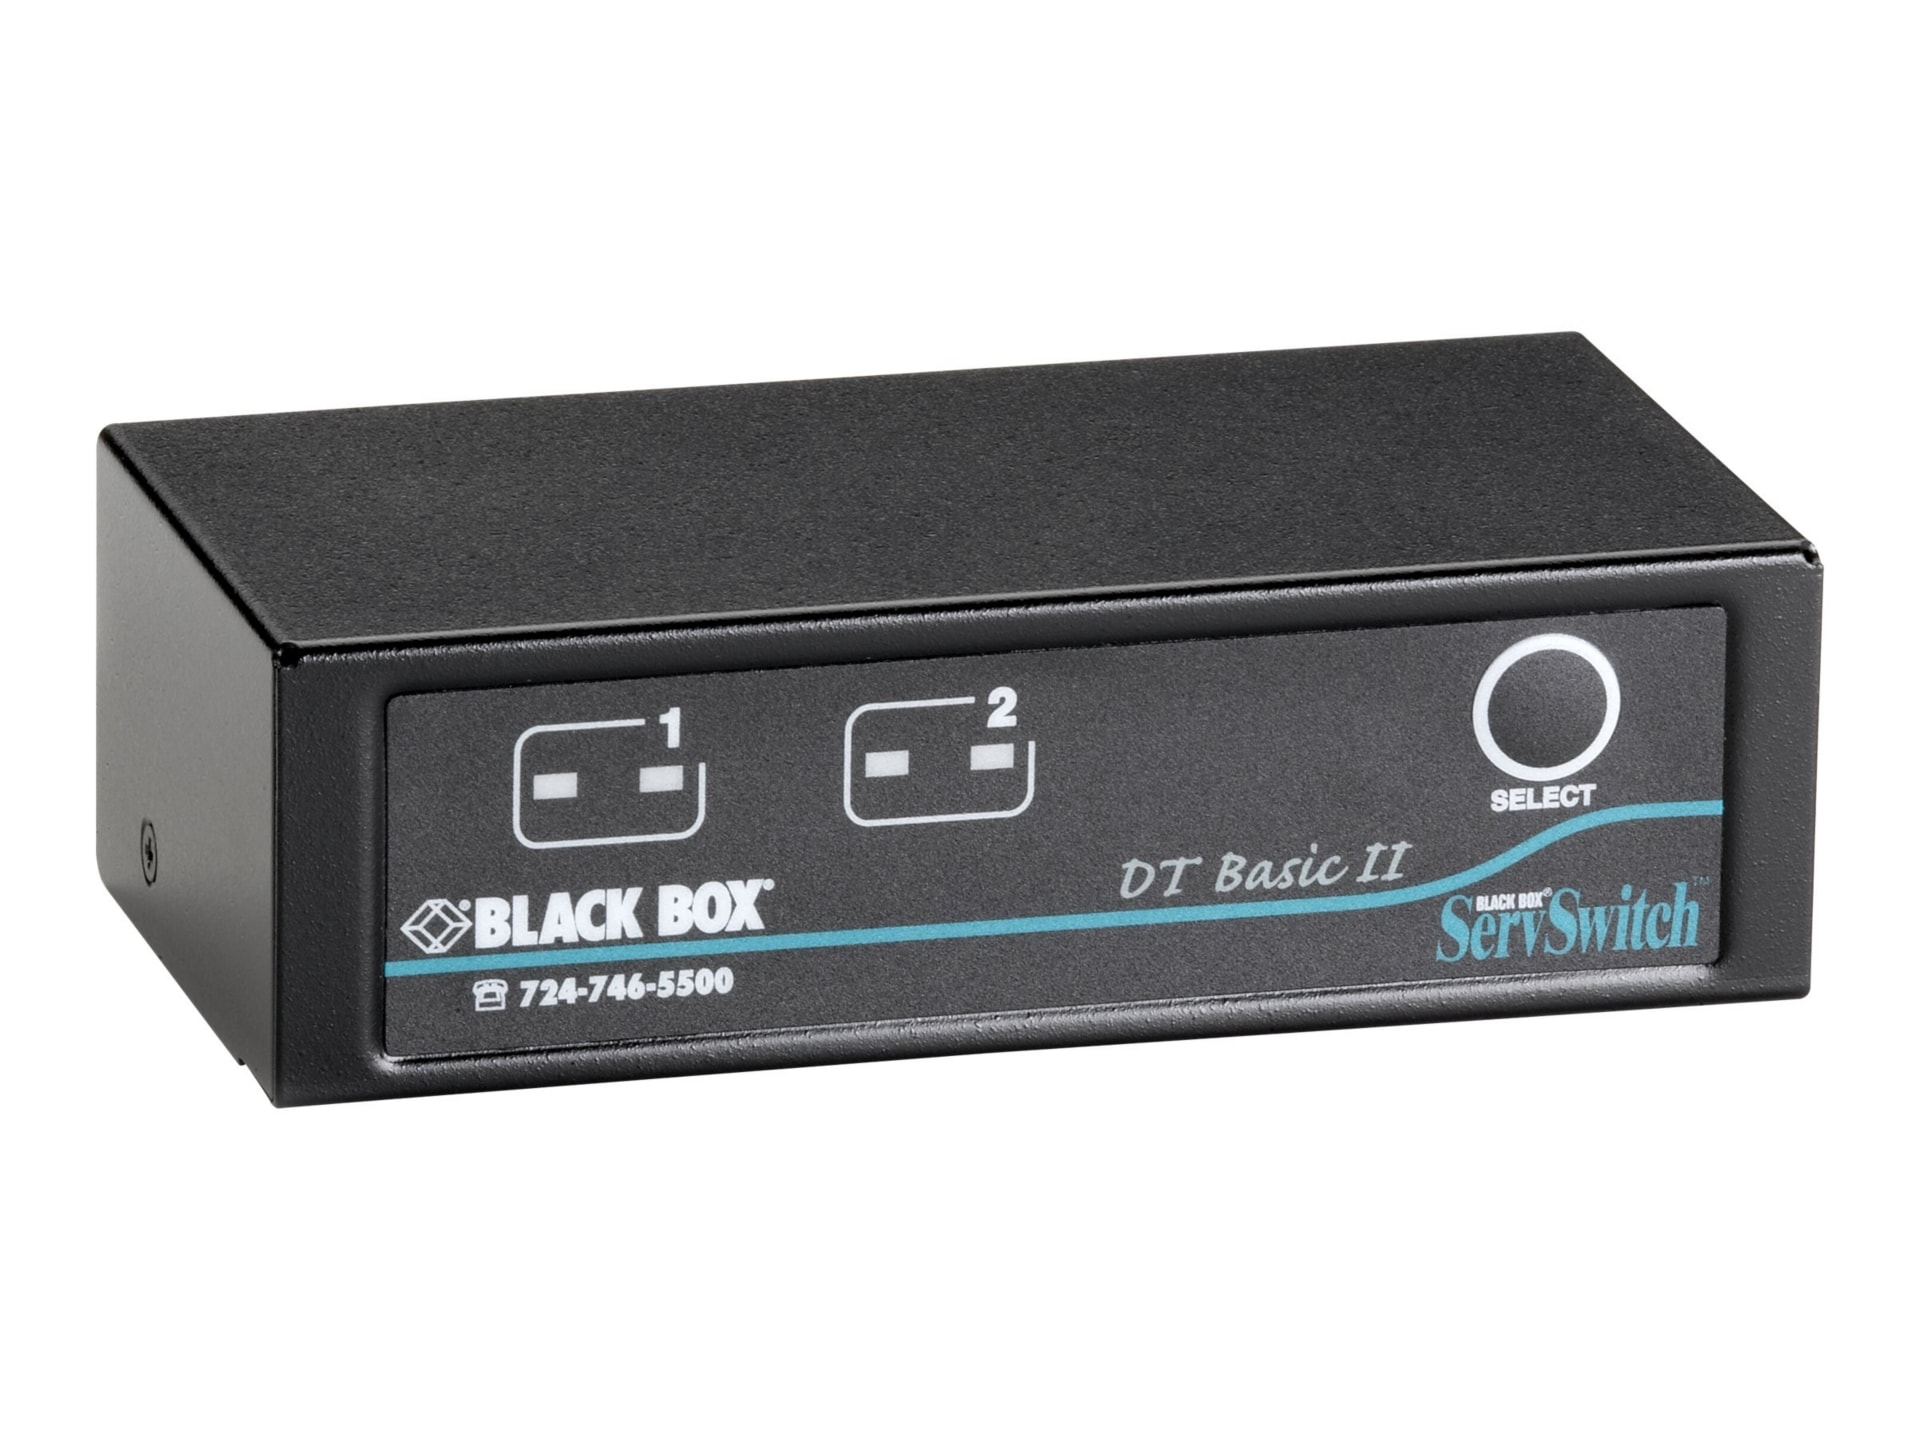 Black Box ServSwitch DT Basic II - KVM switch - 2 ports